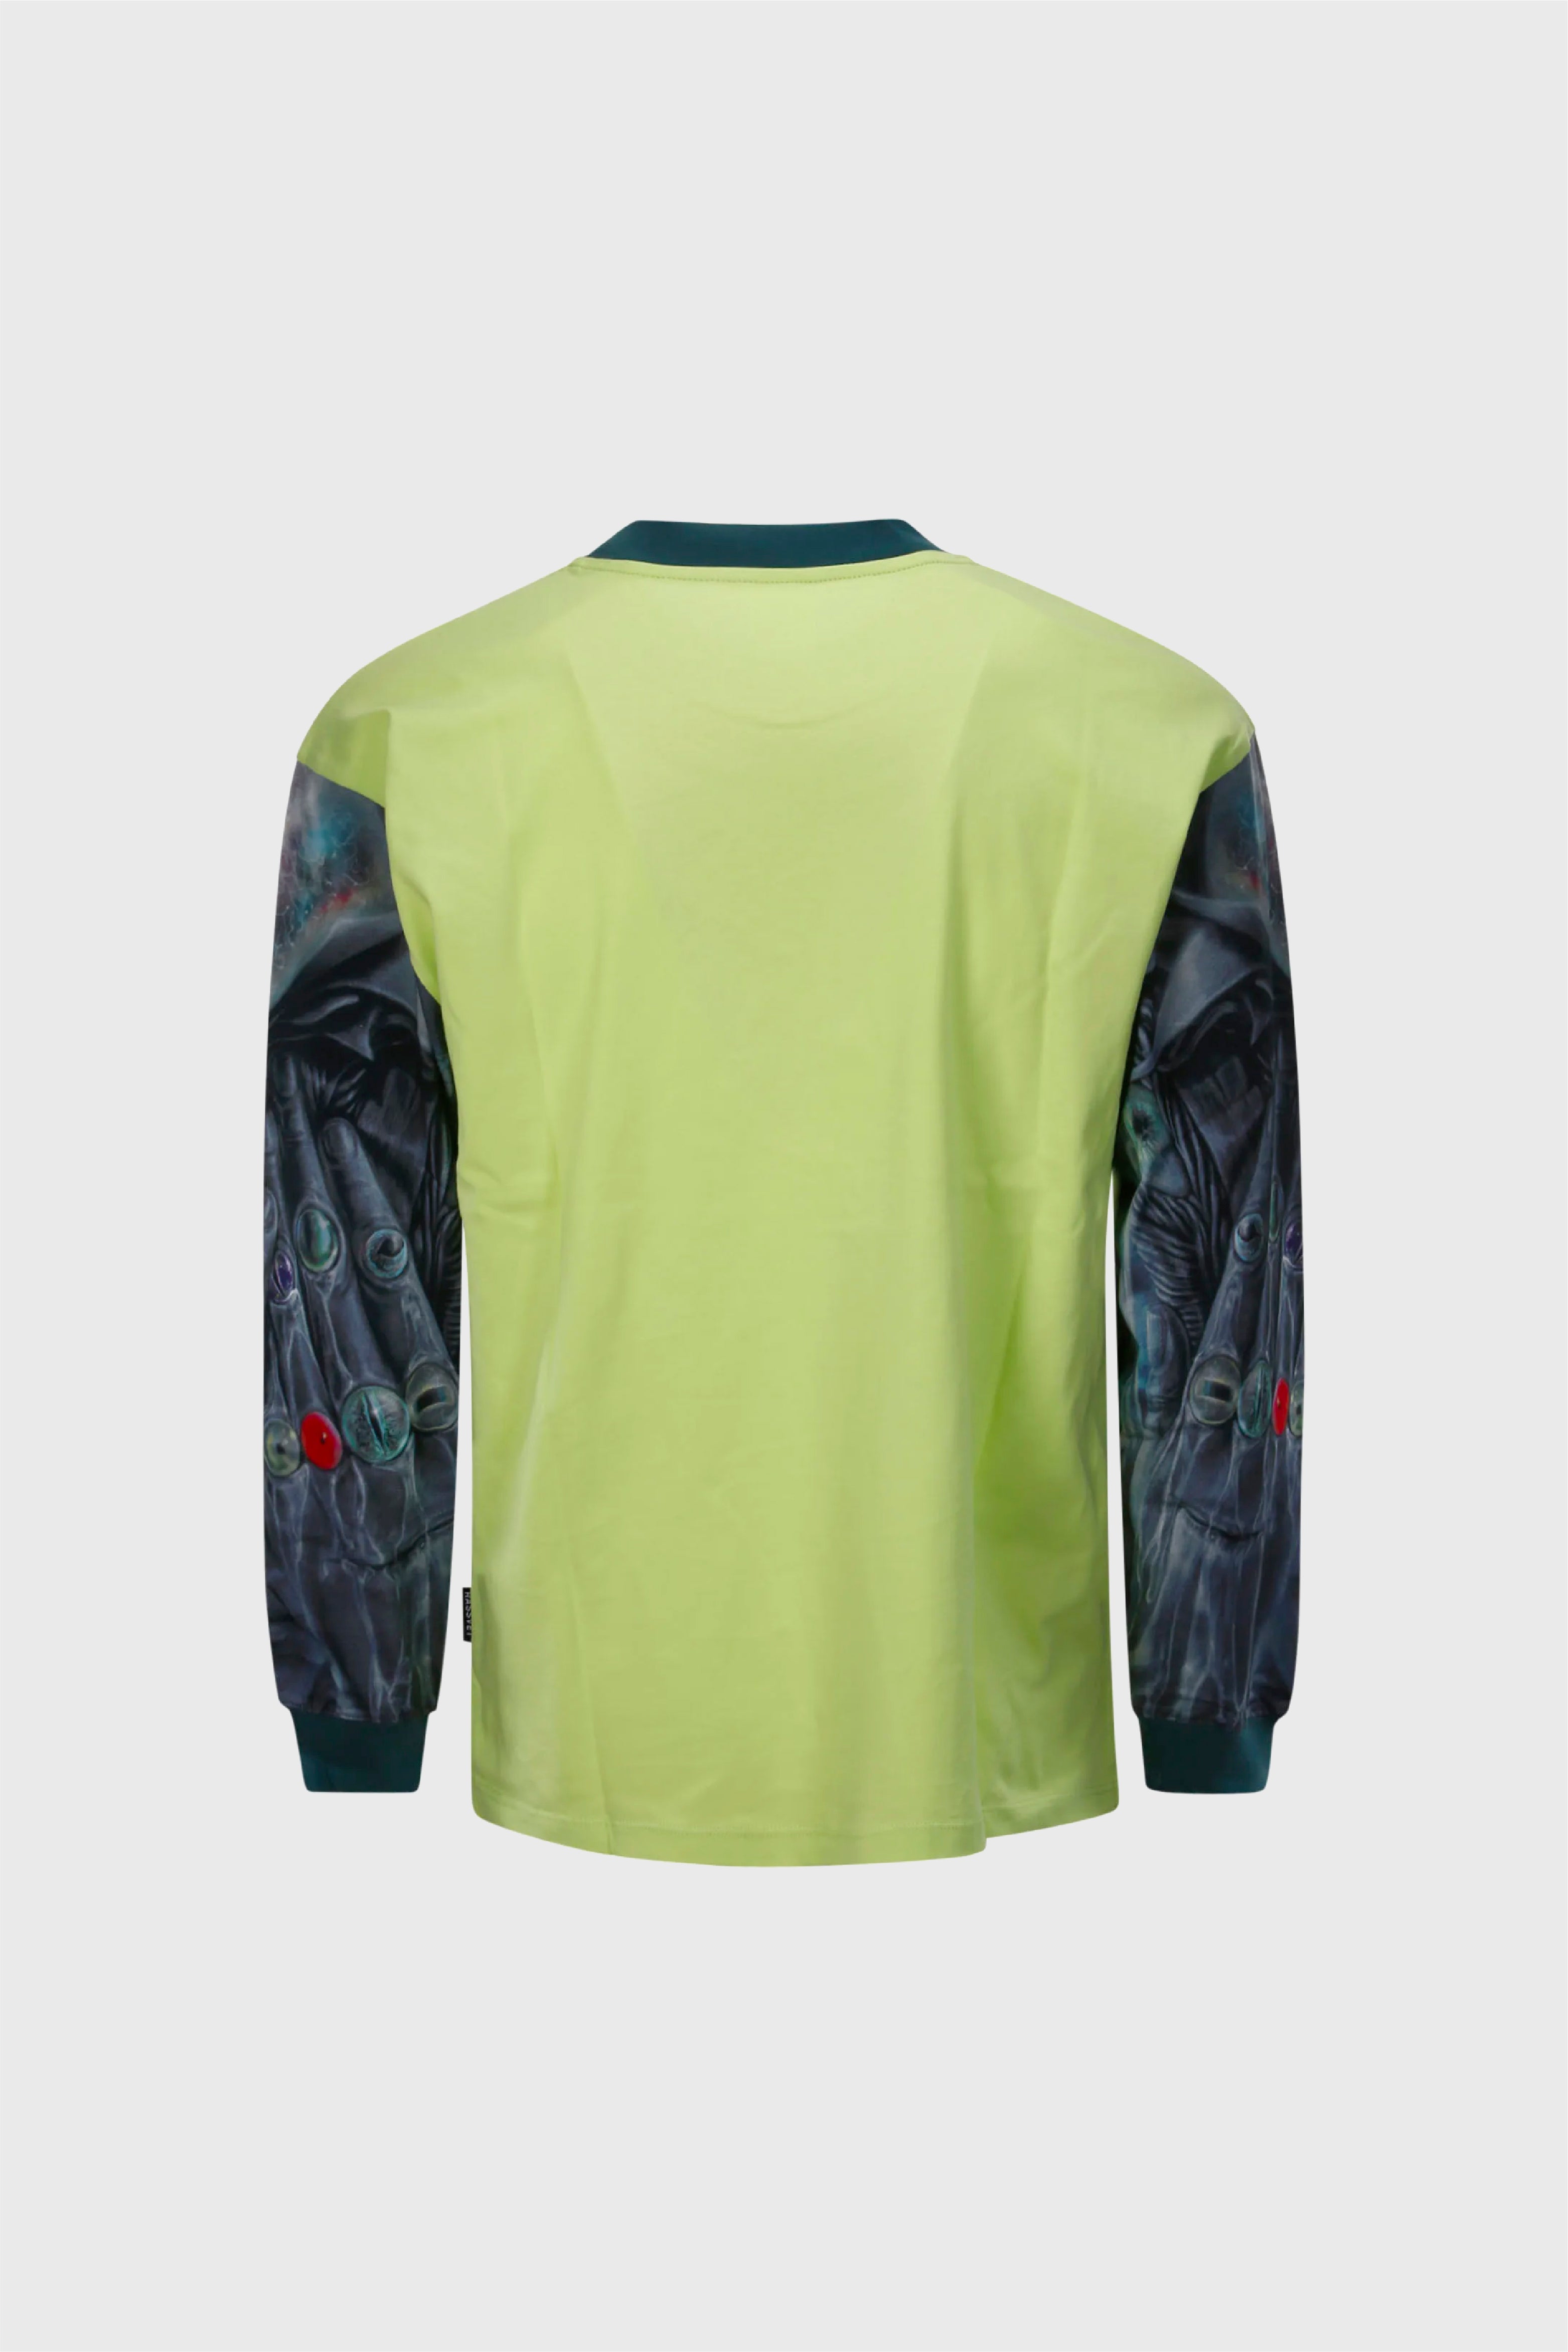 Selectshop FRAME - RASSVET Dian Liang Long Sleeeve Tee T-Shirts Concept Store Dubai